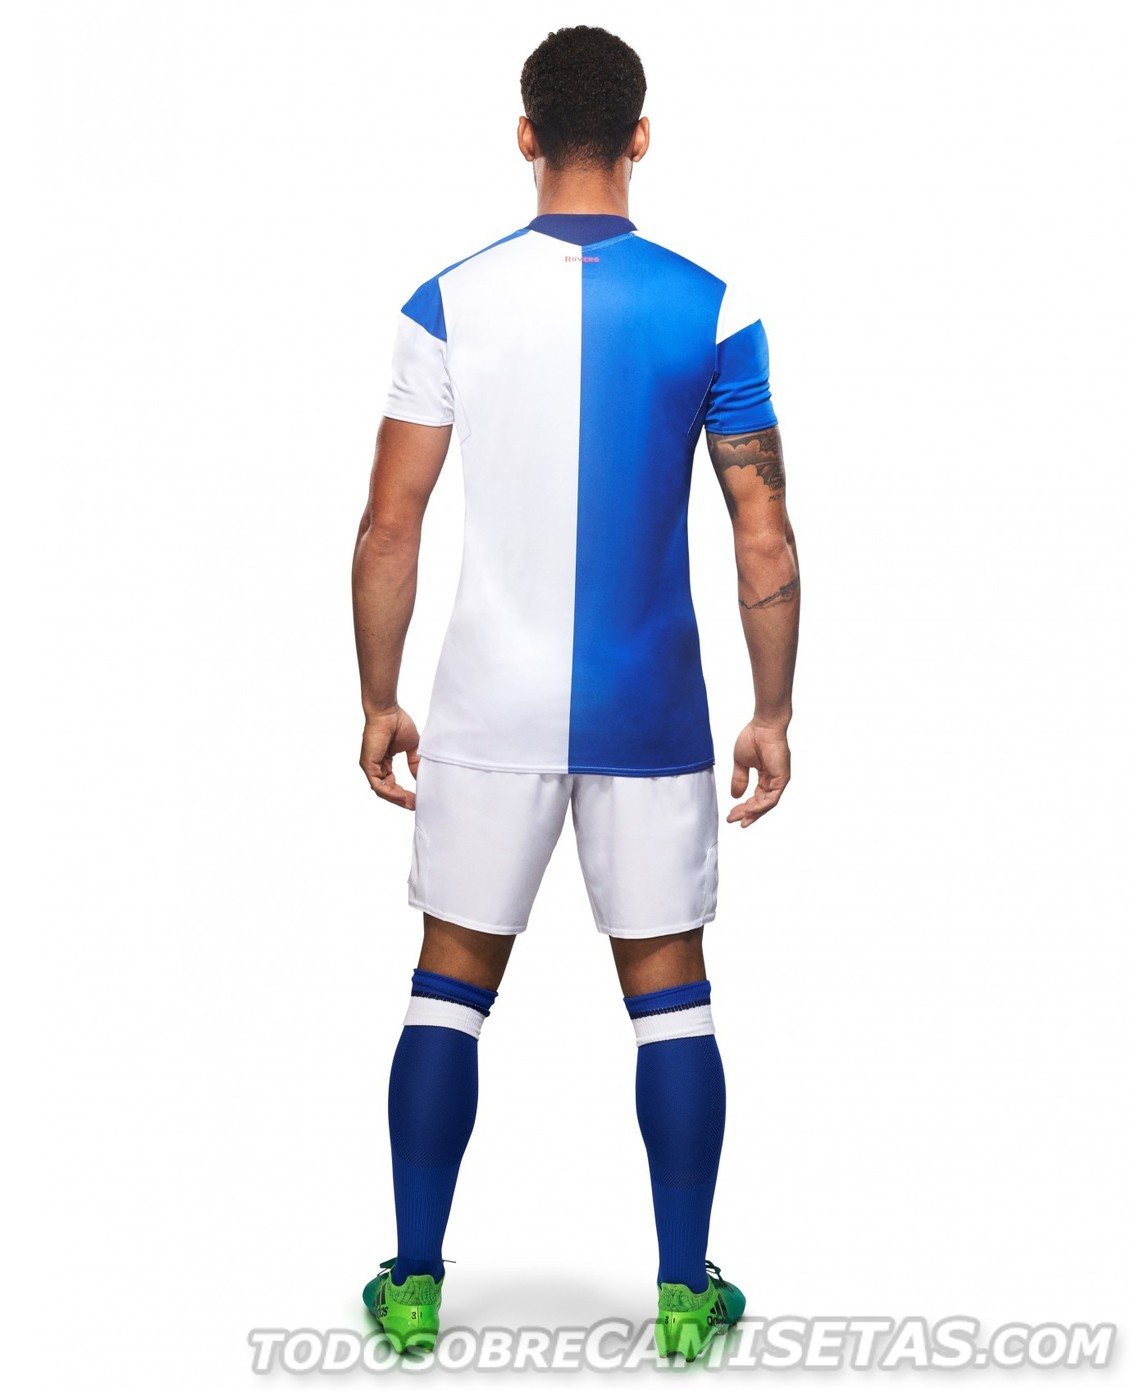 Blackburn Rovers 2017-18 Umbro Home Kit